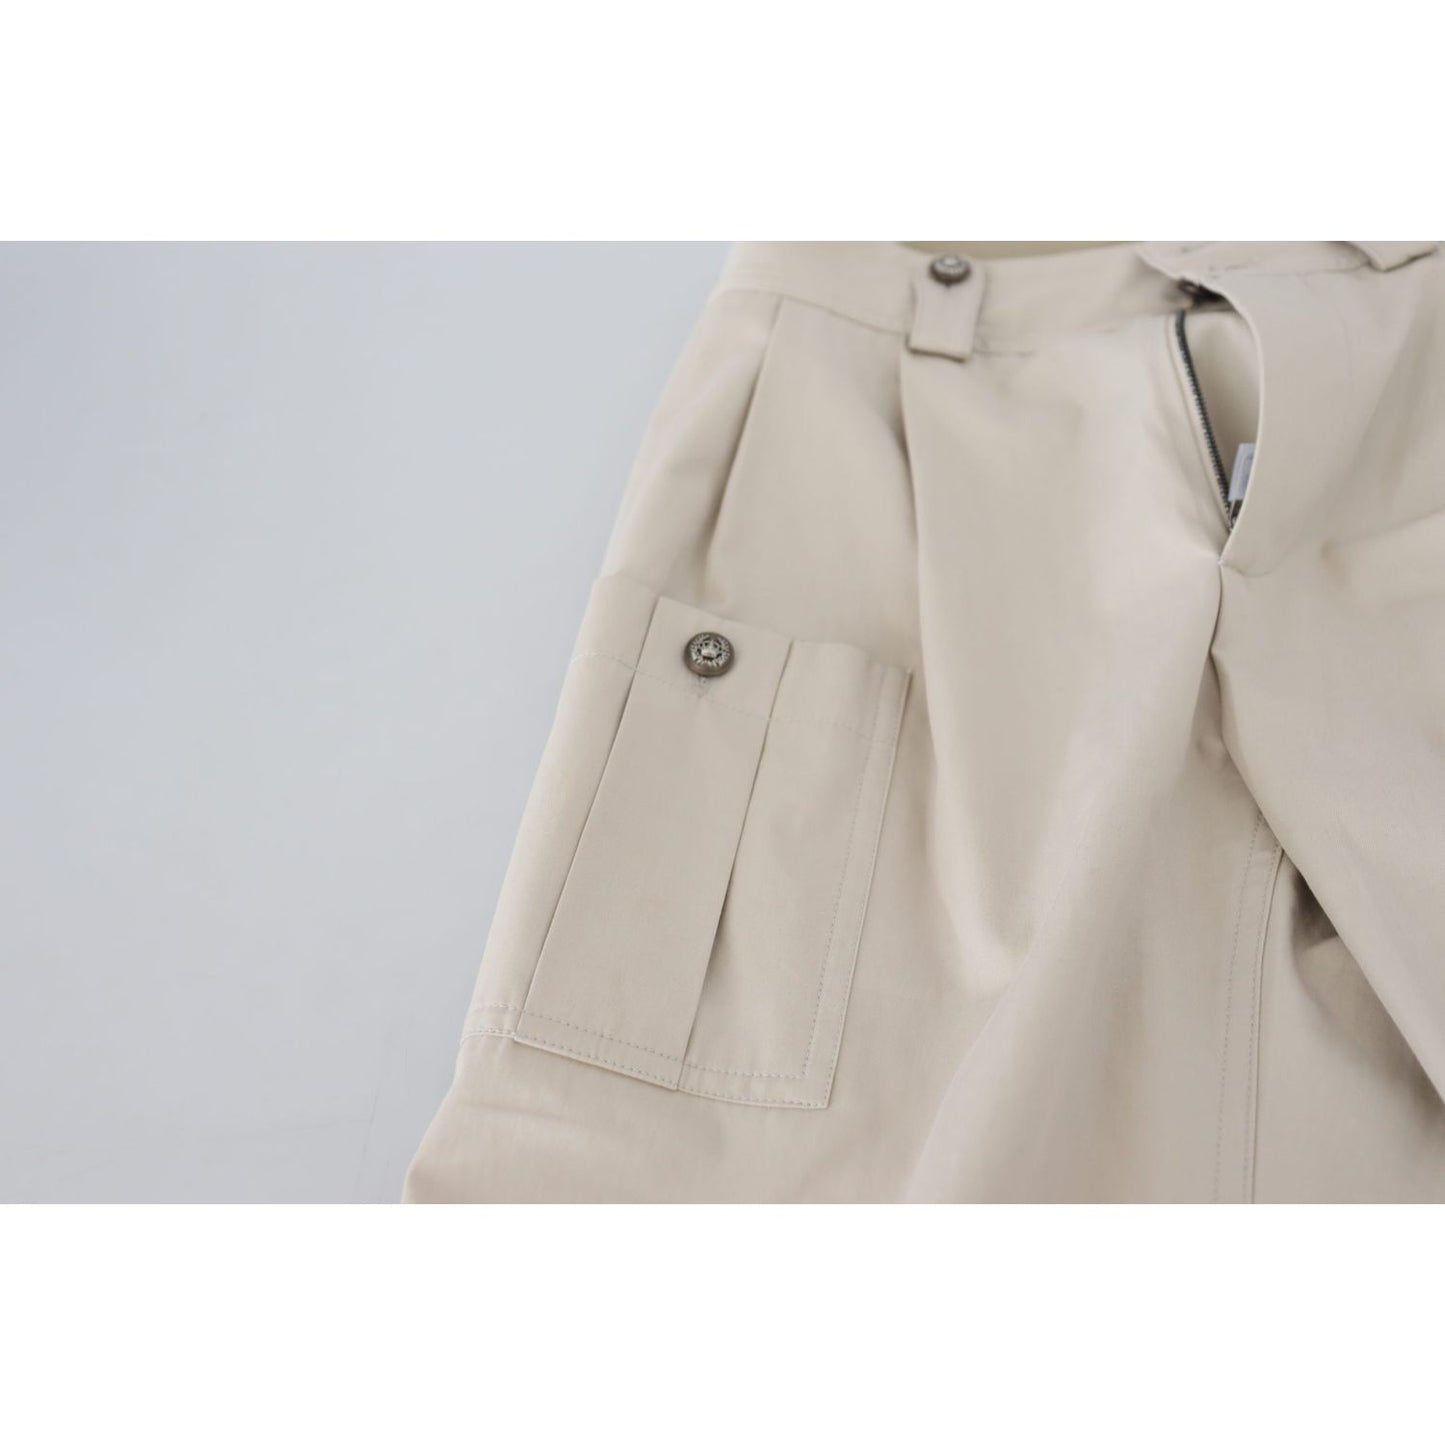 Dolce & Gabbana Chic Beige Cotton Trousers for Elegant Comfort beige-high-waist-women-pants IMG_3140-scaled-5addf0e8-1b5.jpg